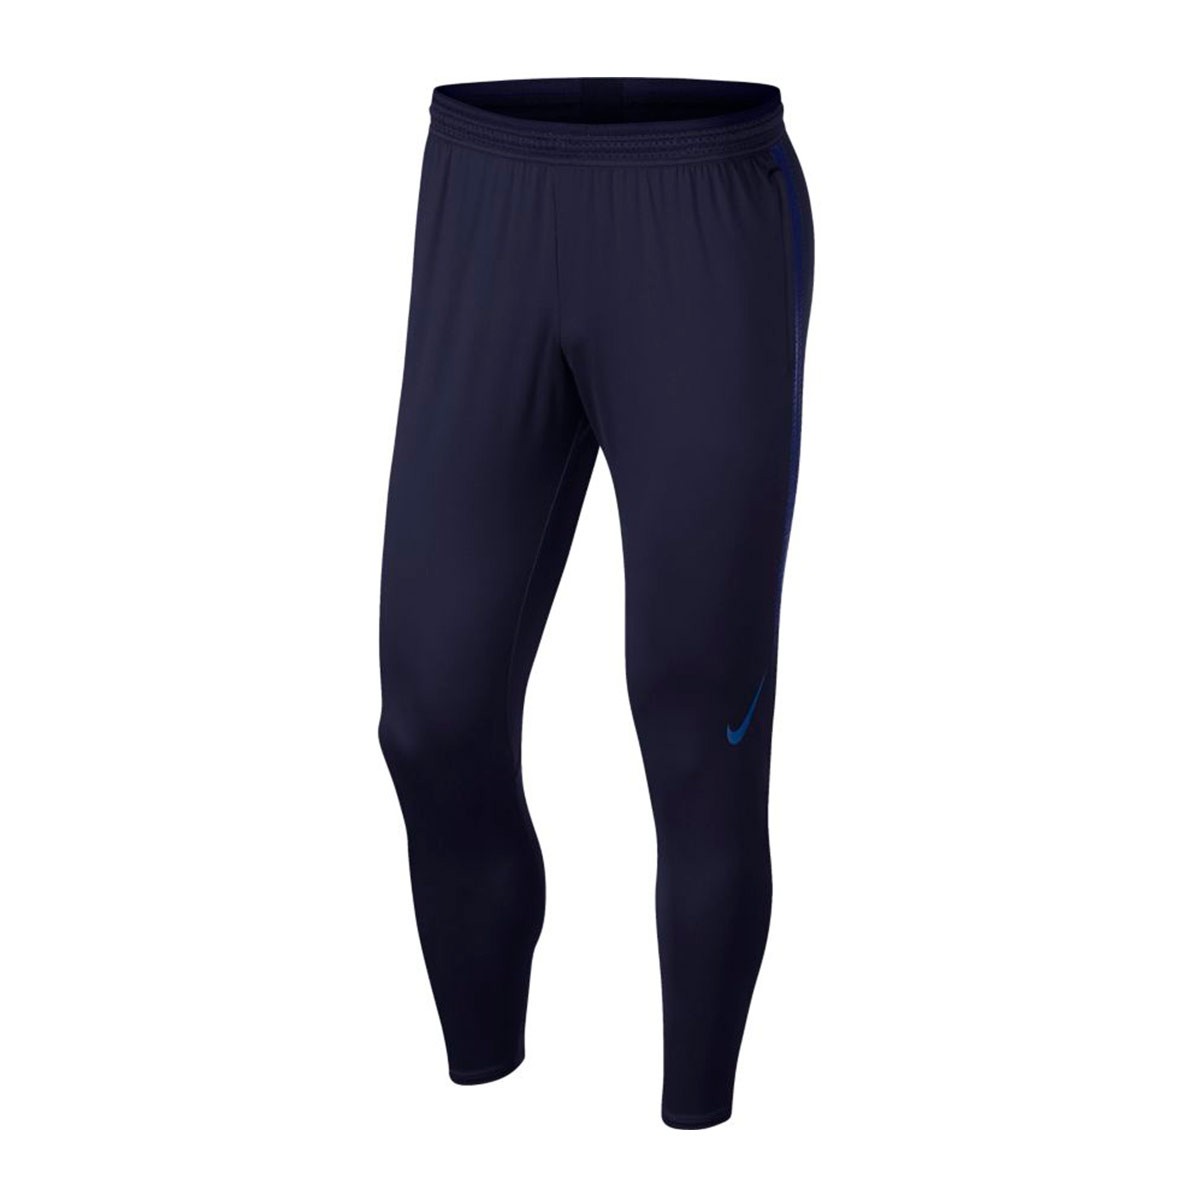 pants Nike Strike Flex Blackened blue 